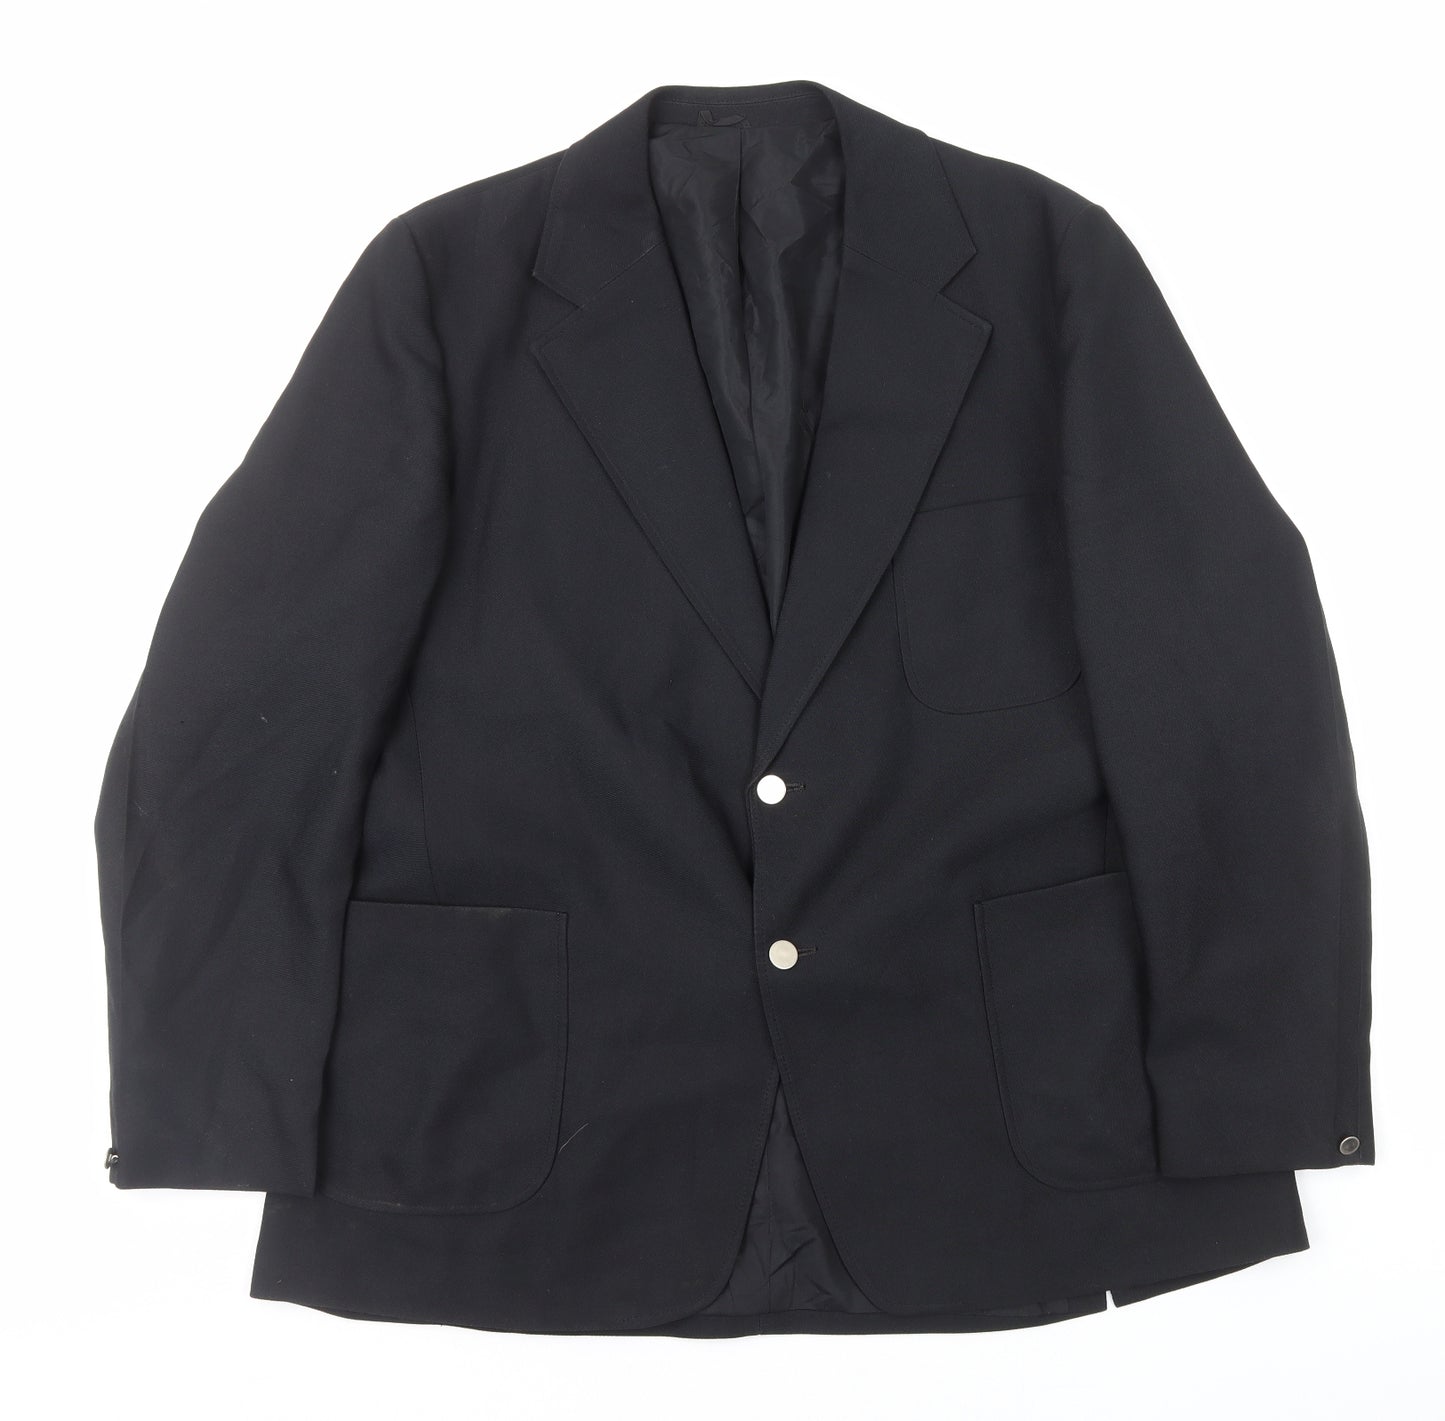 Foster Mens Black Polyester Jacket Blazer Size M